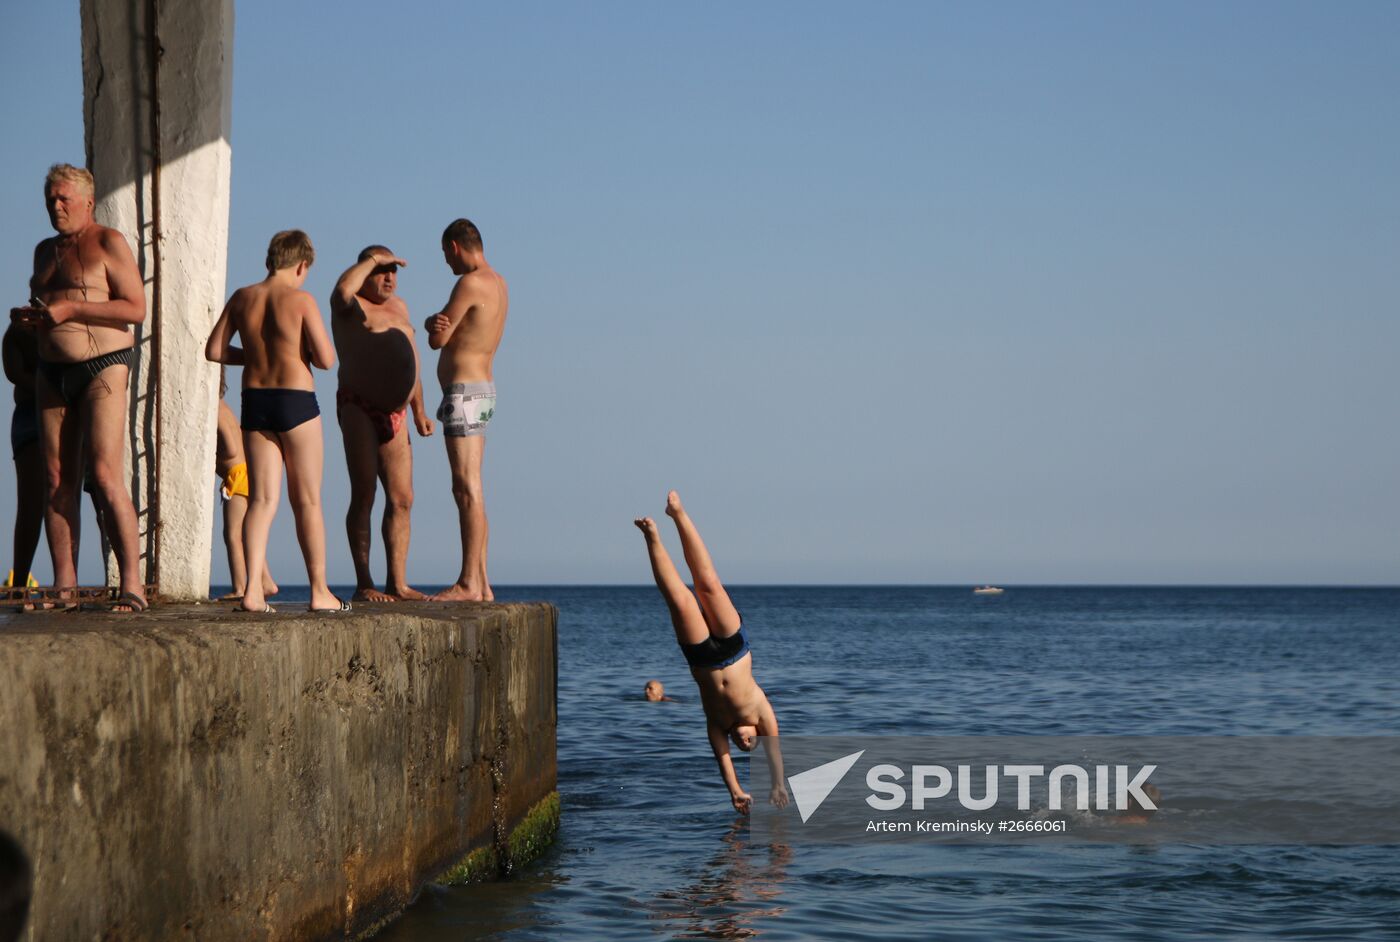 Recreation in Crimea